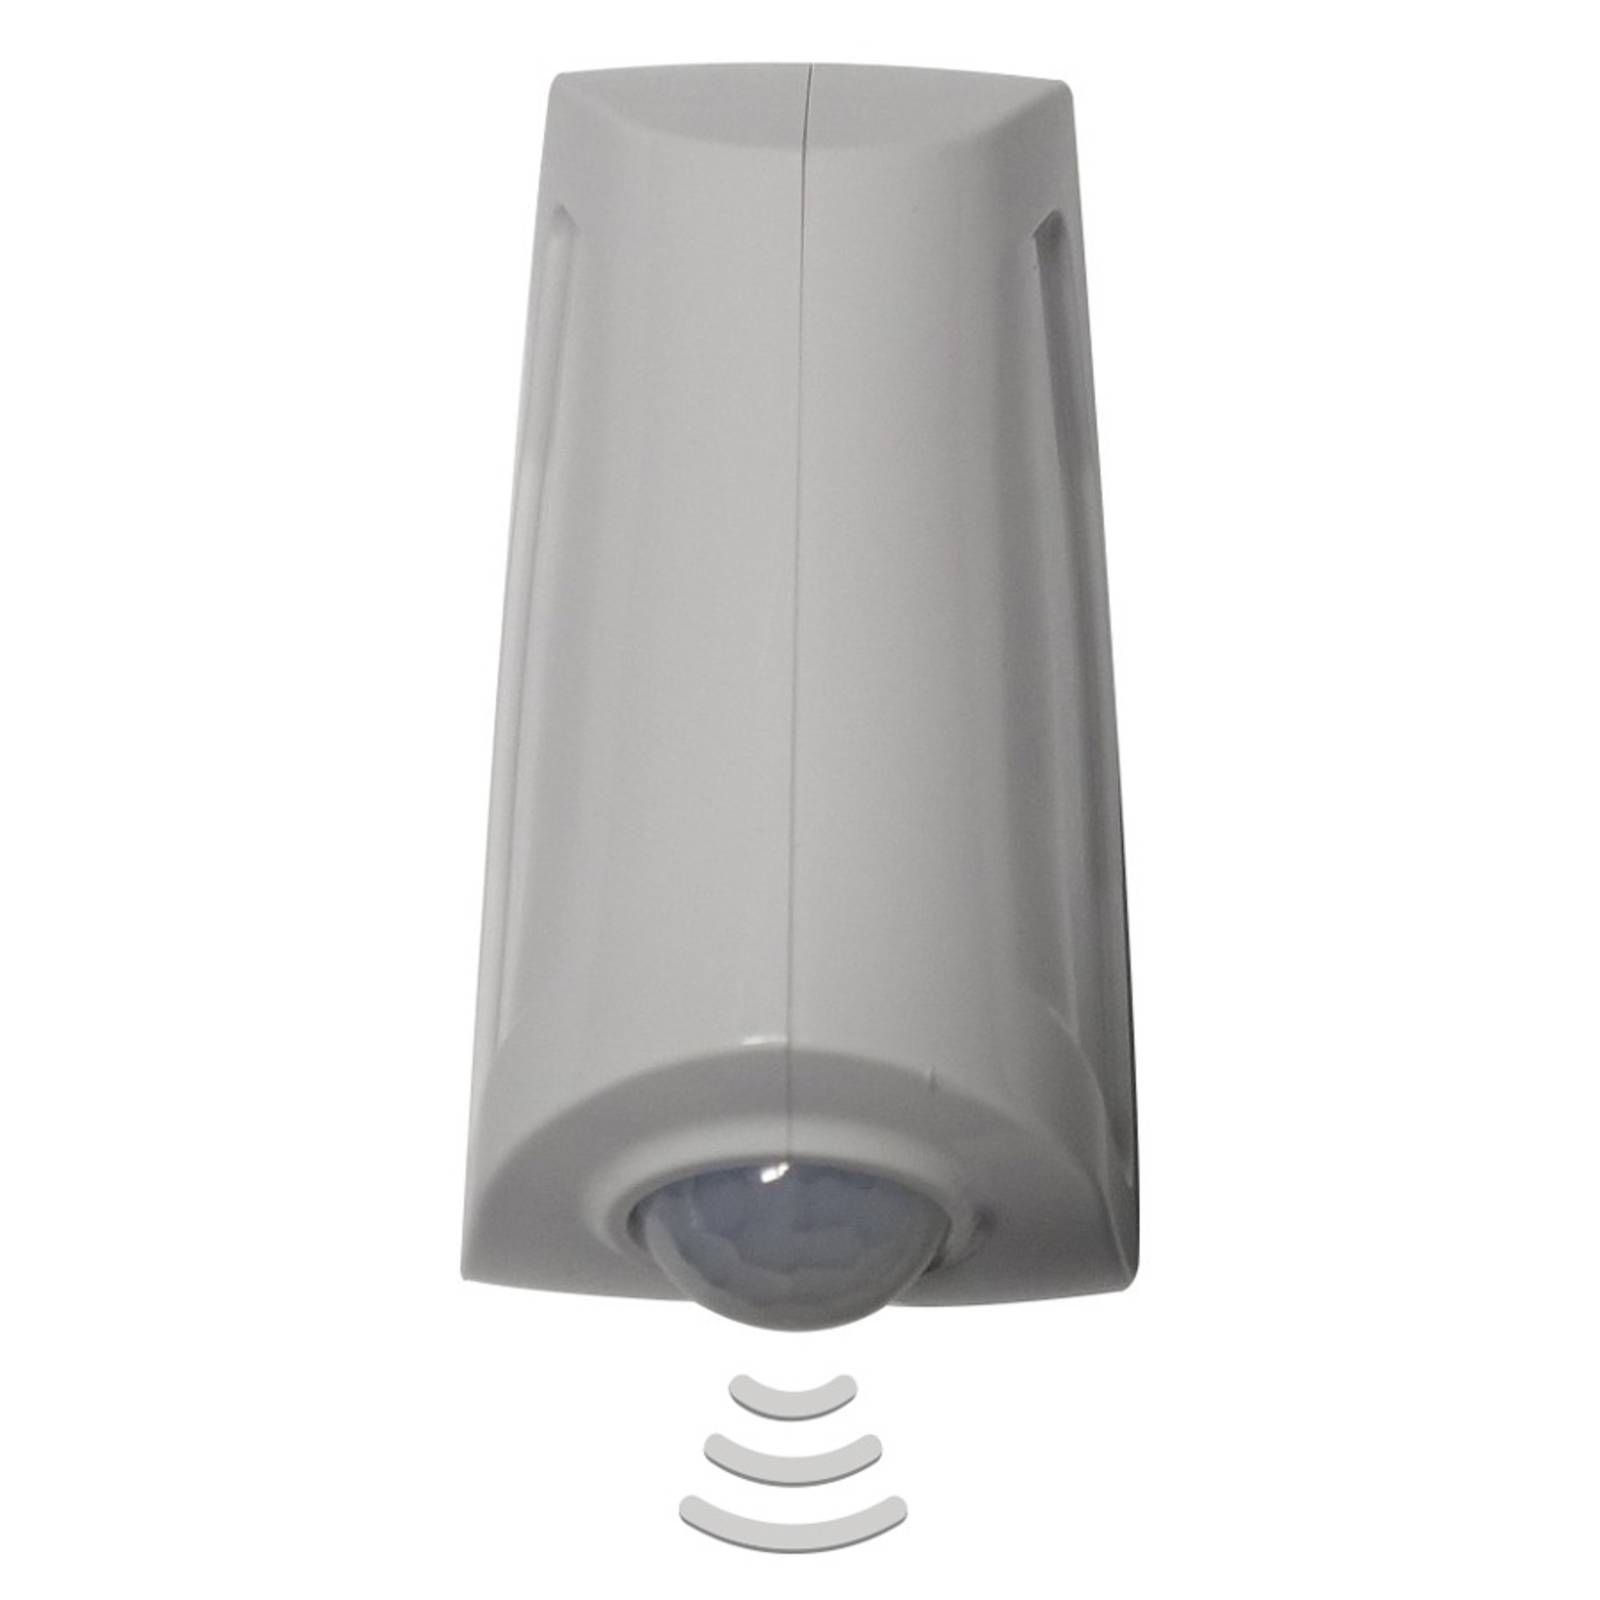 Müller-Licht Orientačné LED svetlo Caplux snímač batéria IP54, plast, 0.6W, L: 7.6 cm, K: 10.5cm